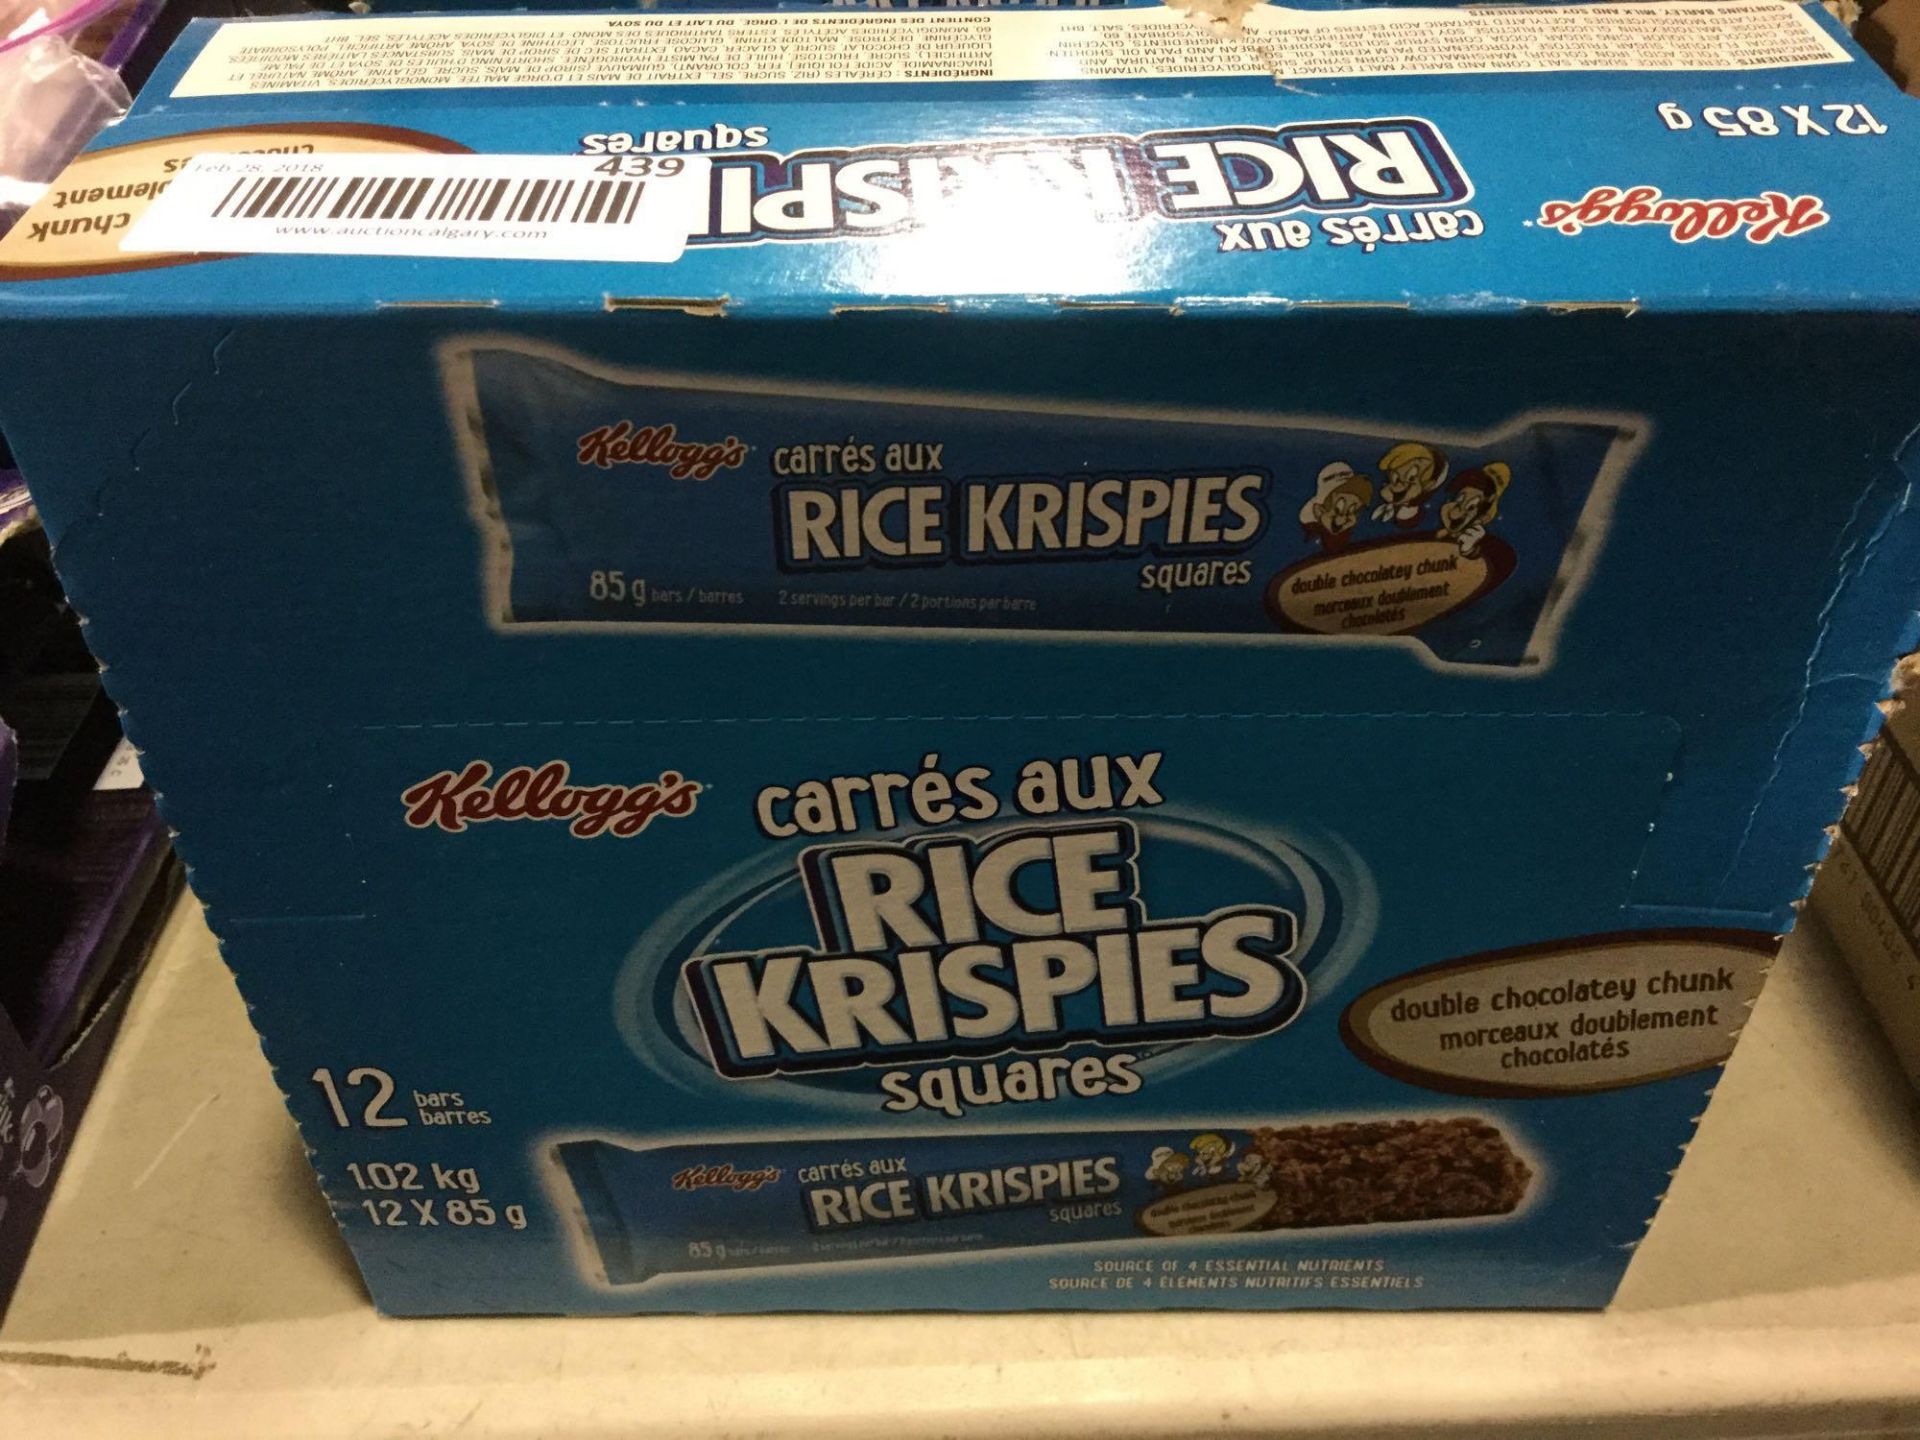 Case of 12 x 85 g Rice Krispies Bars